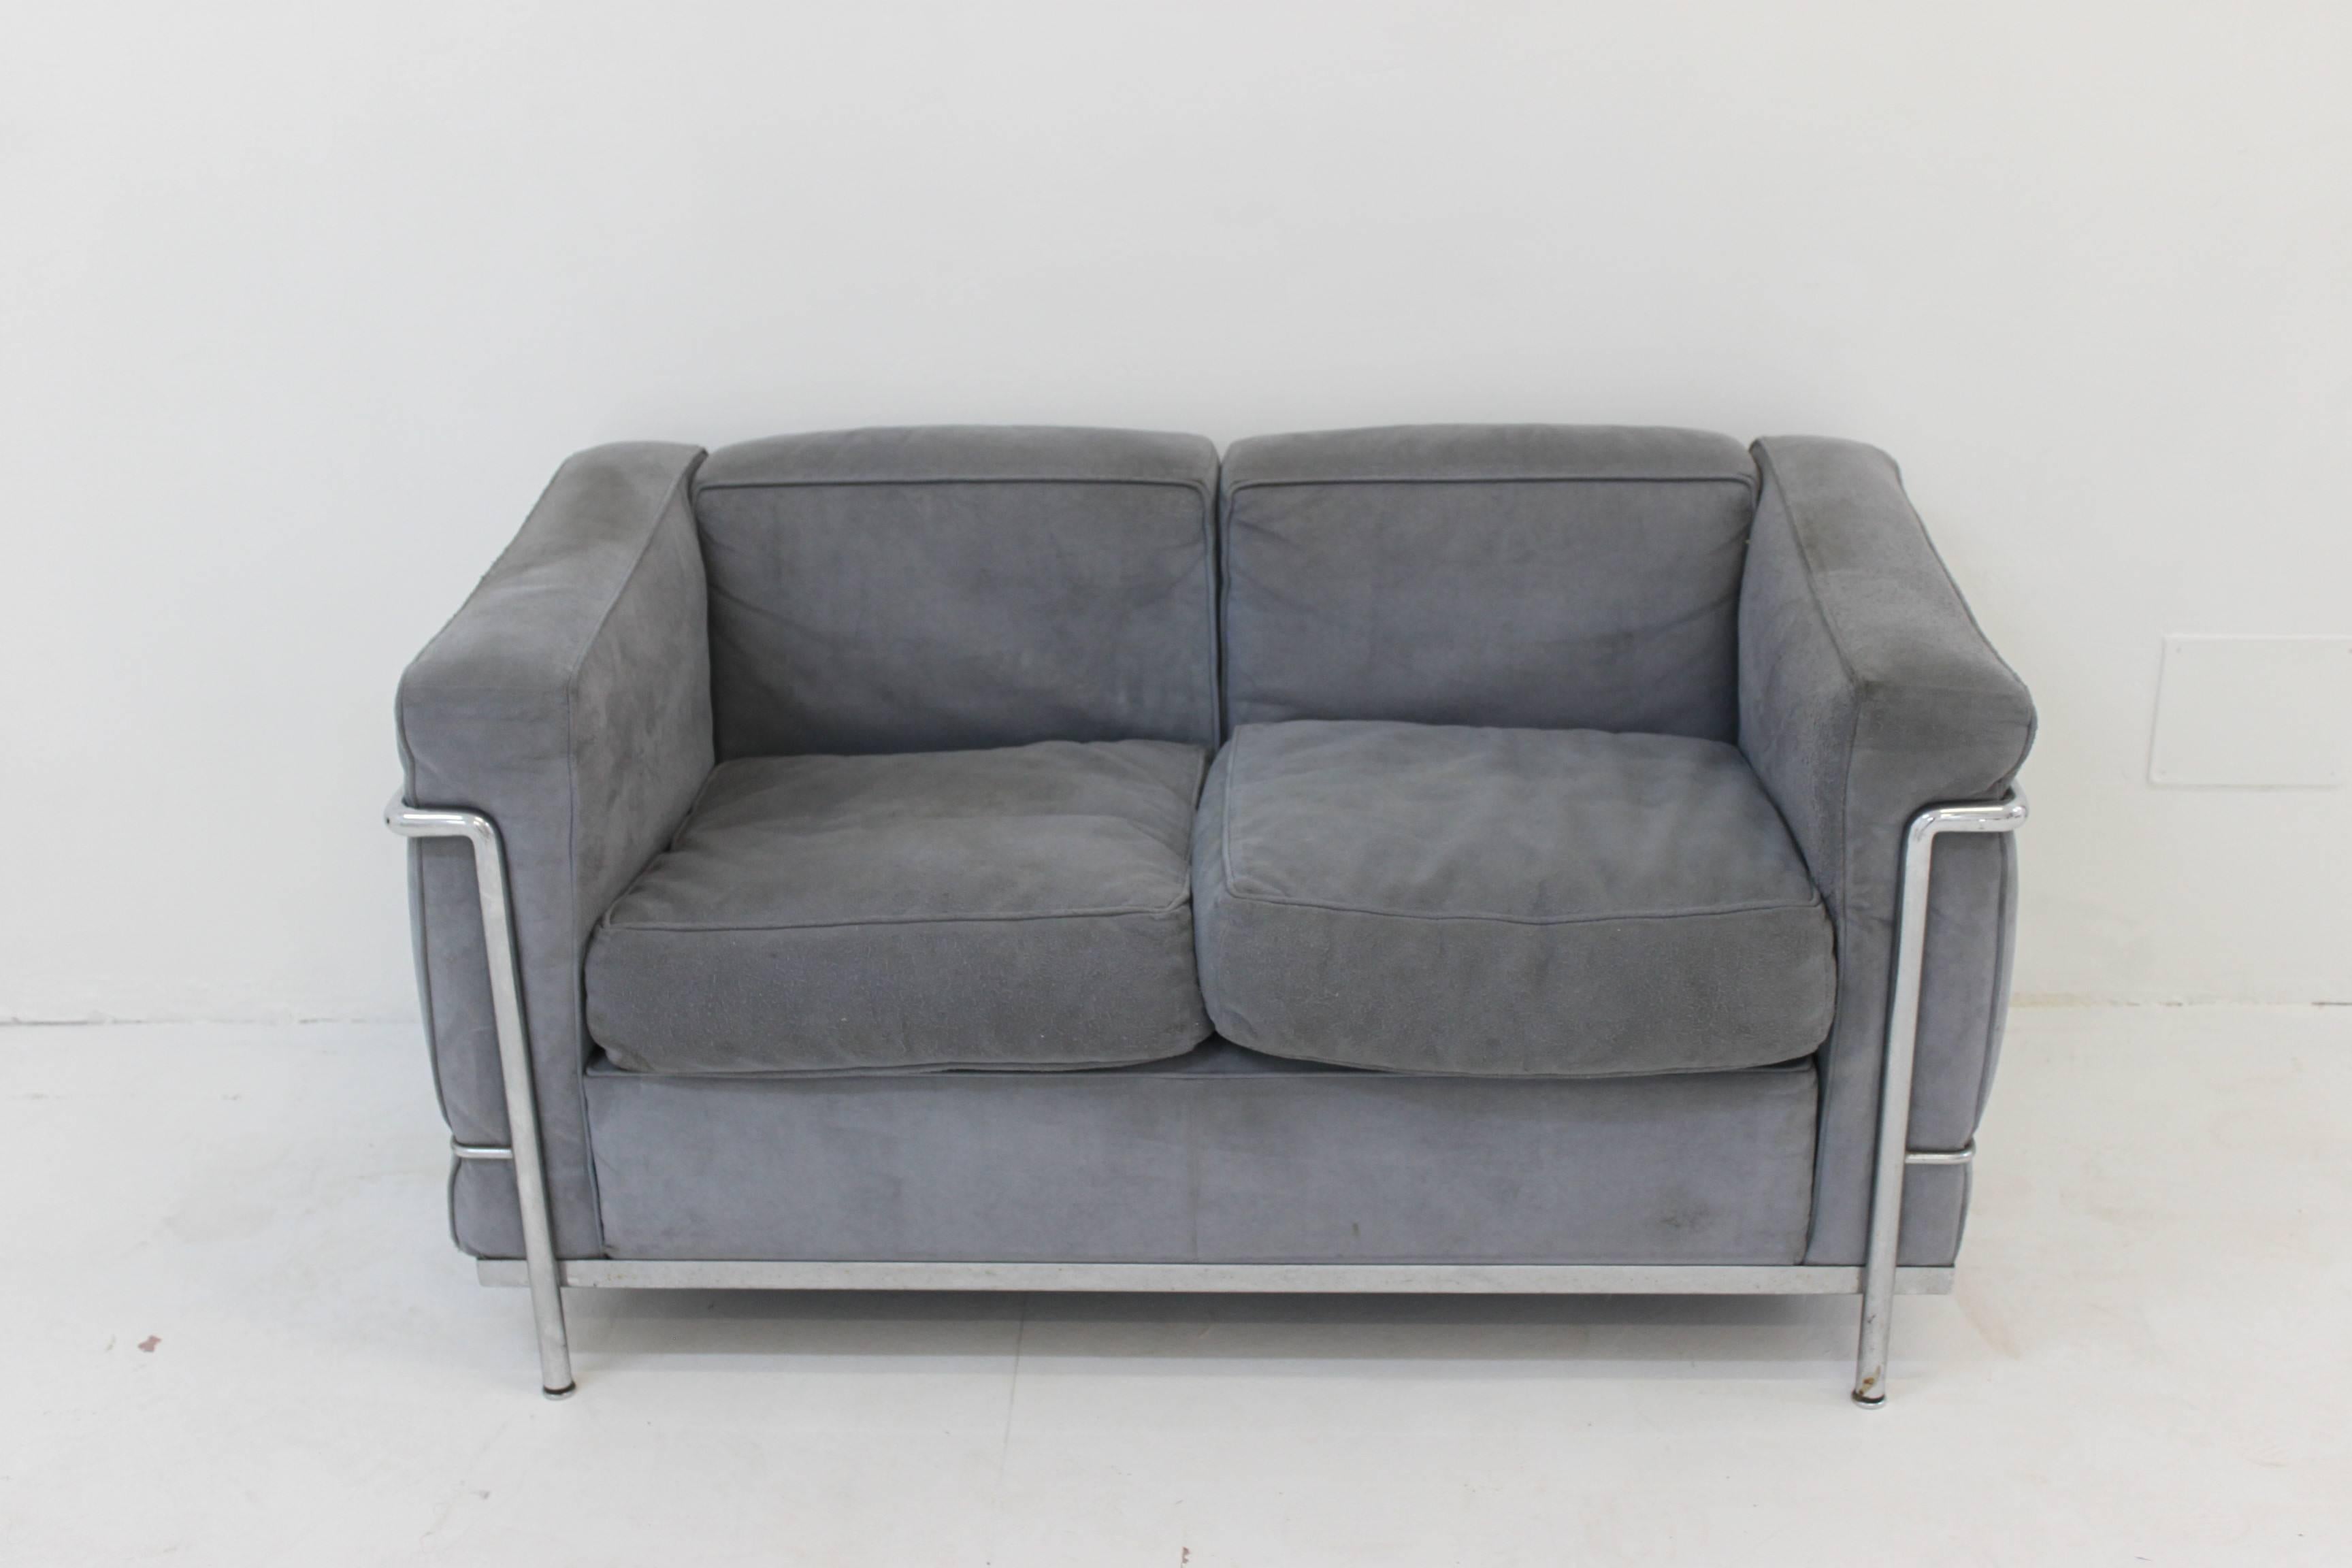 Two beautiful sofas designed by Le Corbusier for Cassina.
Pair of gray velvet sofas,
1960s.